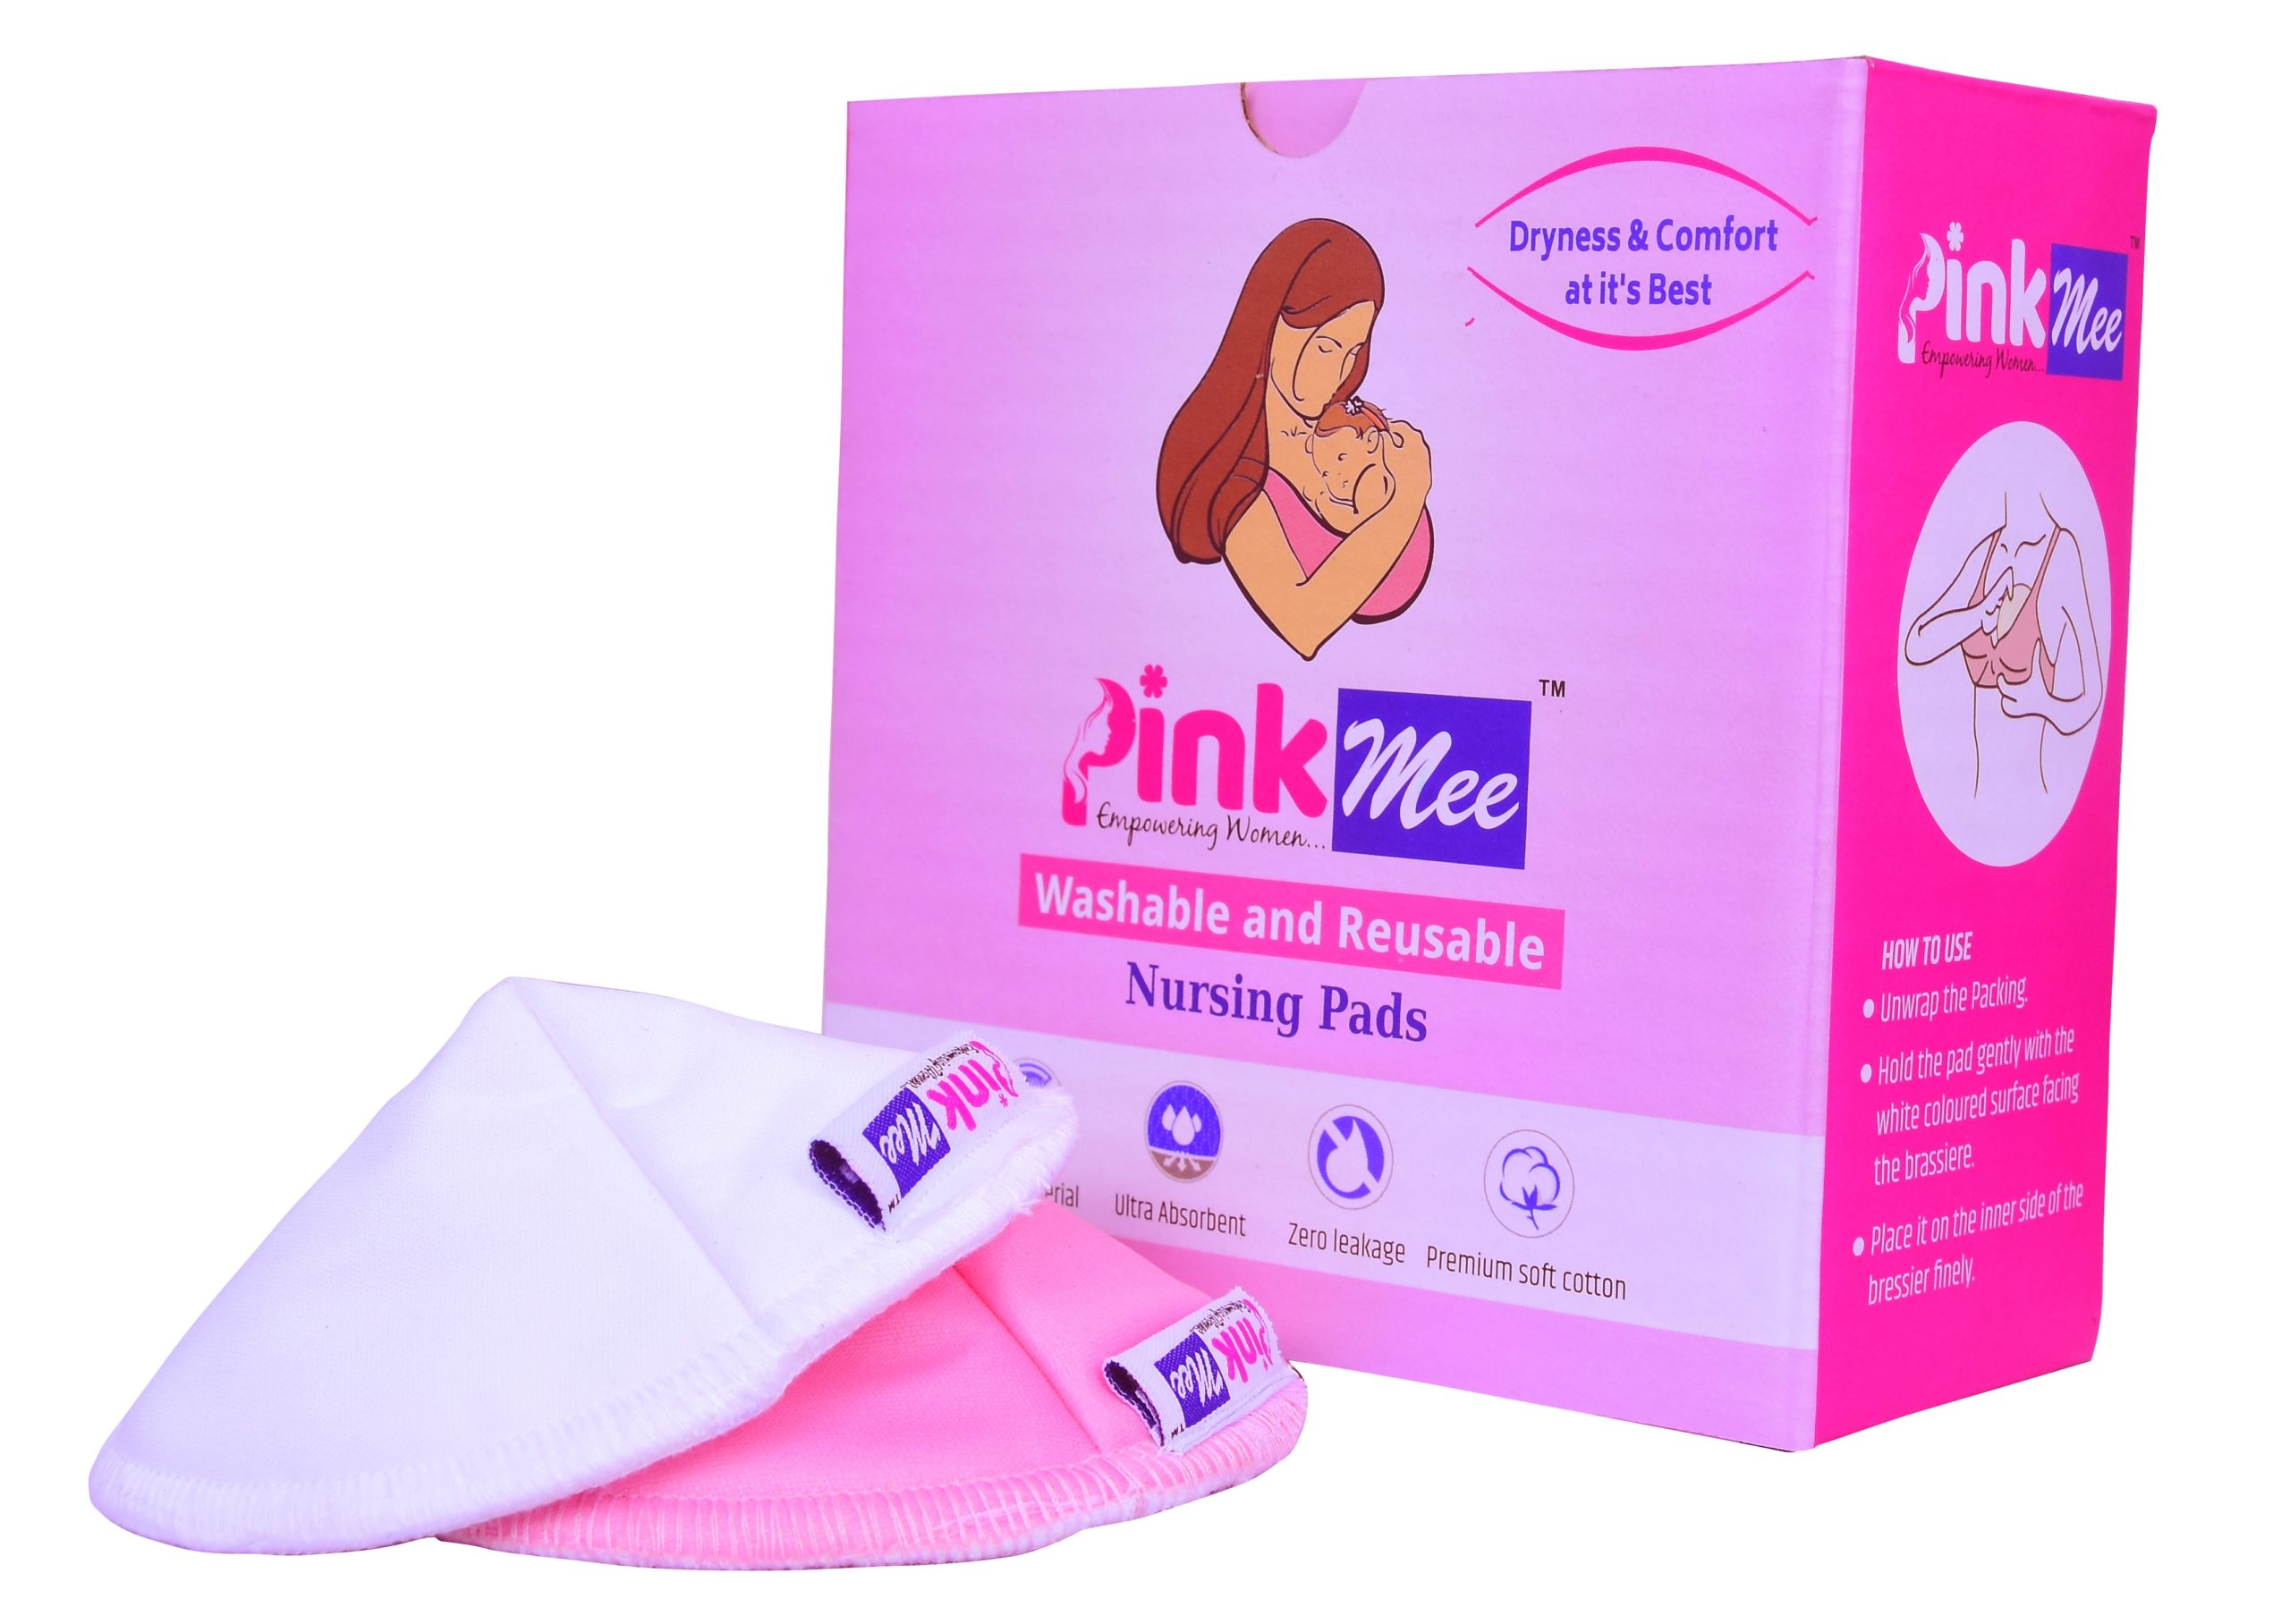 PinkMee Washable and Reusable Nursing Pads